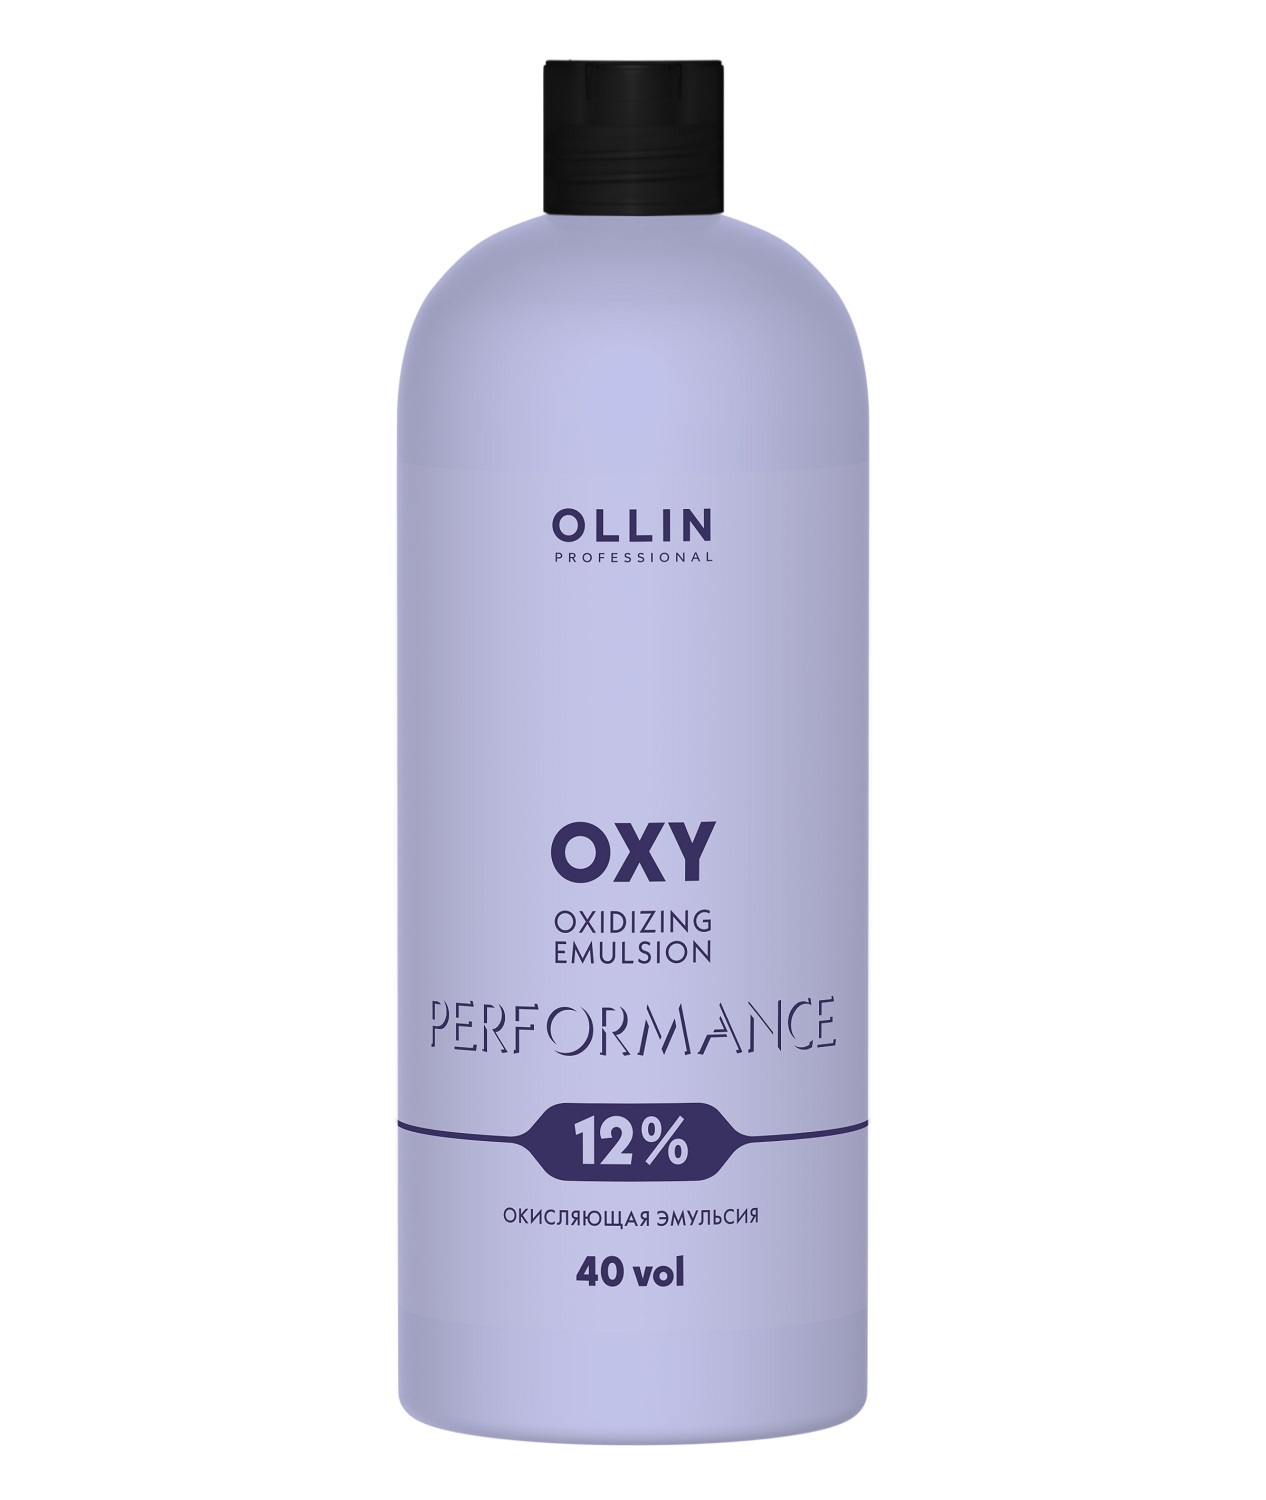 Ollin Professional Окисляющая эмульсия 12% 40 vol, 1000 мл (Ollin Professional, Performance) c developer